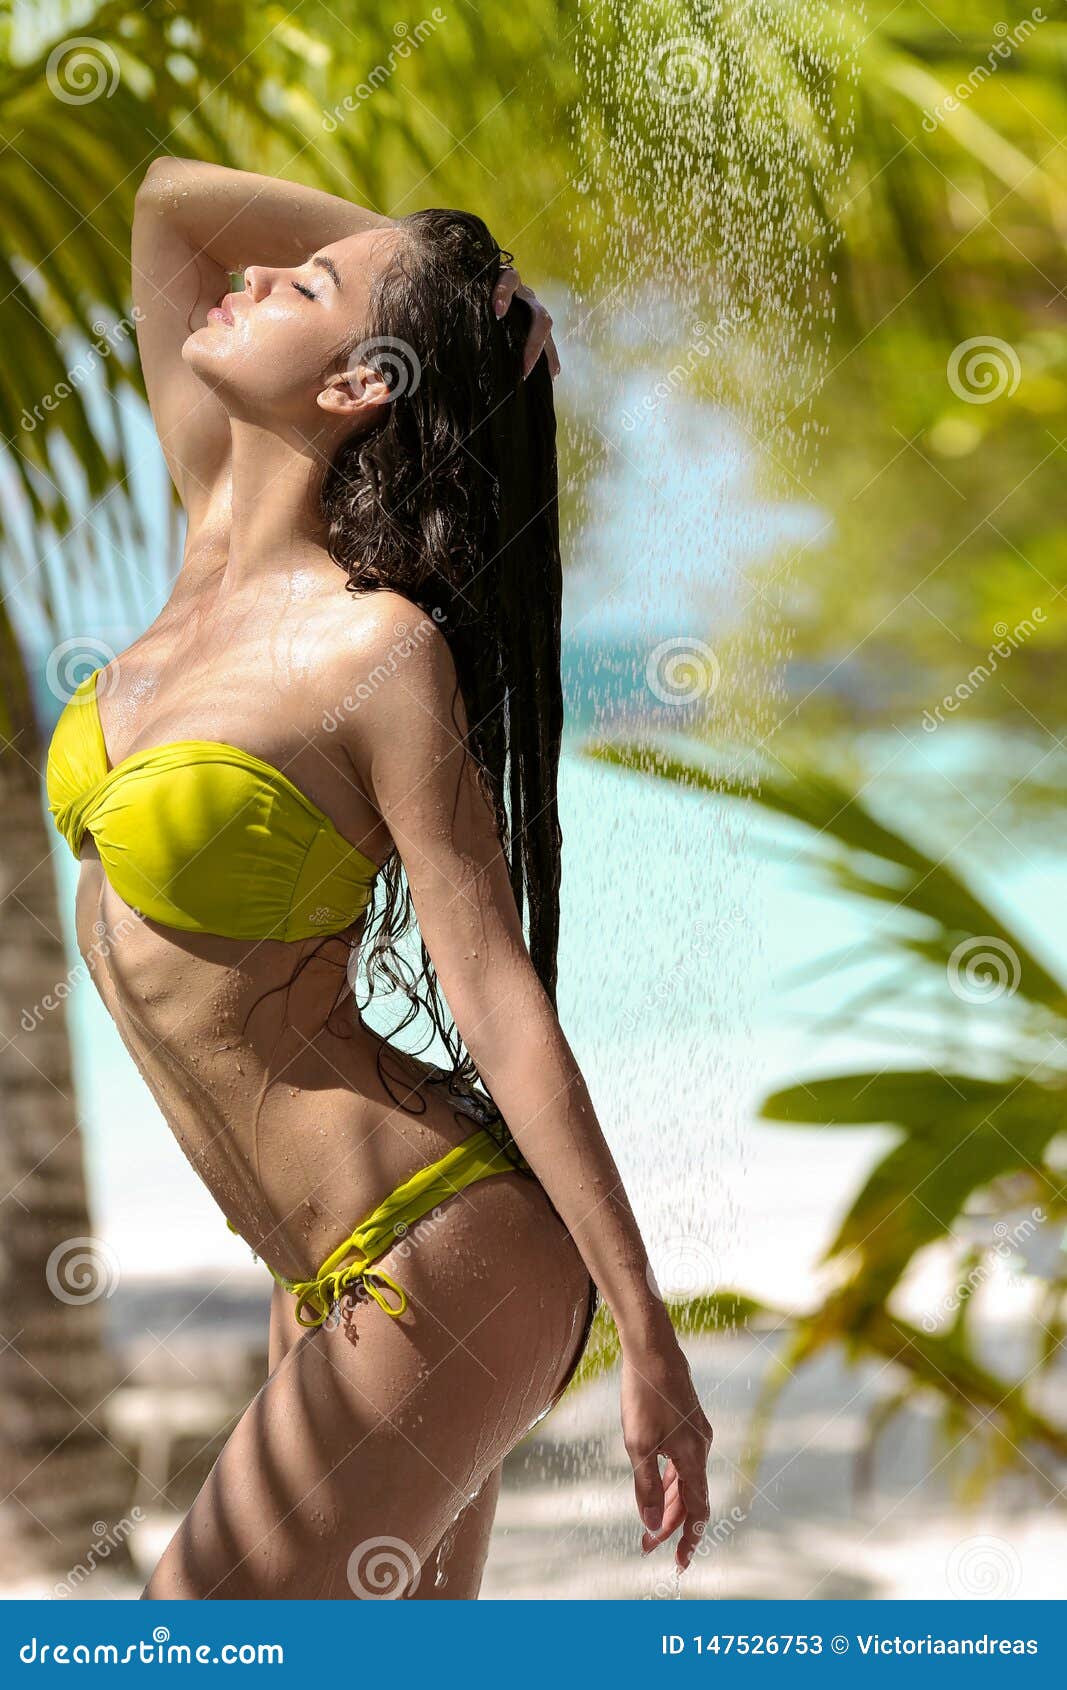 Hot Wet Models English Royals Nude Photos